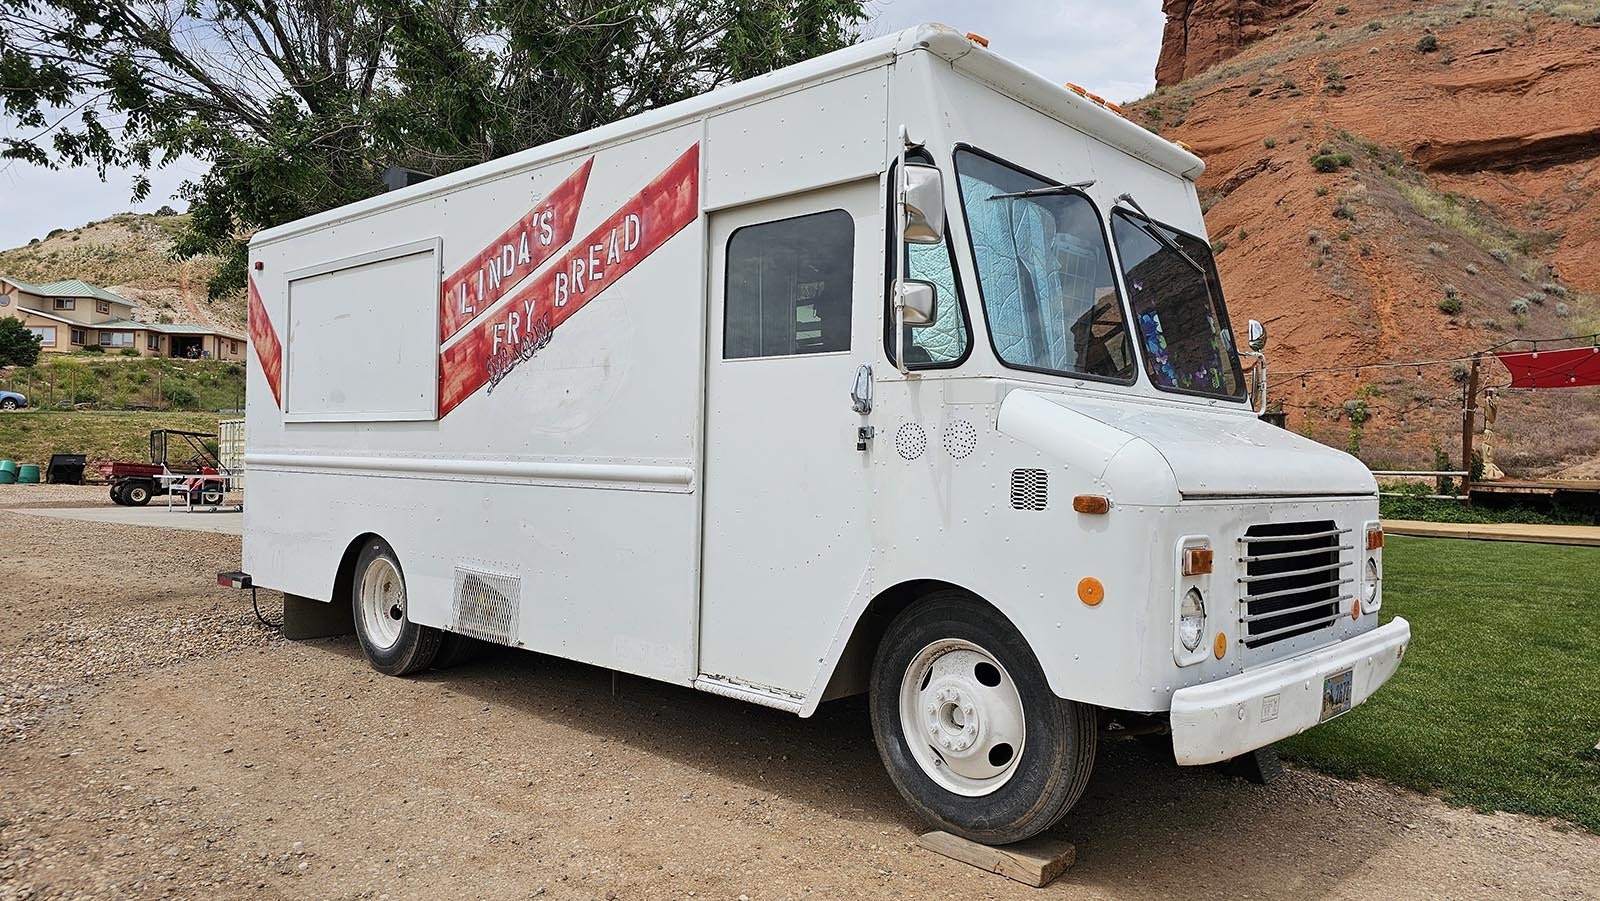 Linda's Fry Bread is a popular food truck that visits Ten Sleep Brewer regularly.